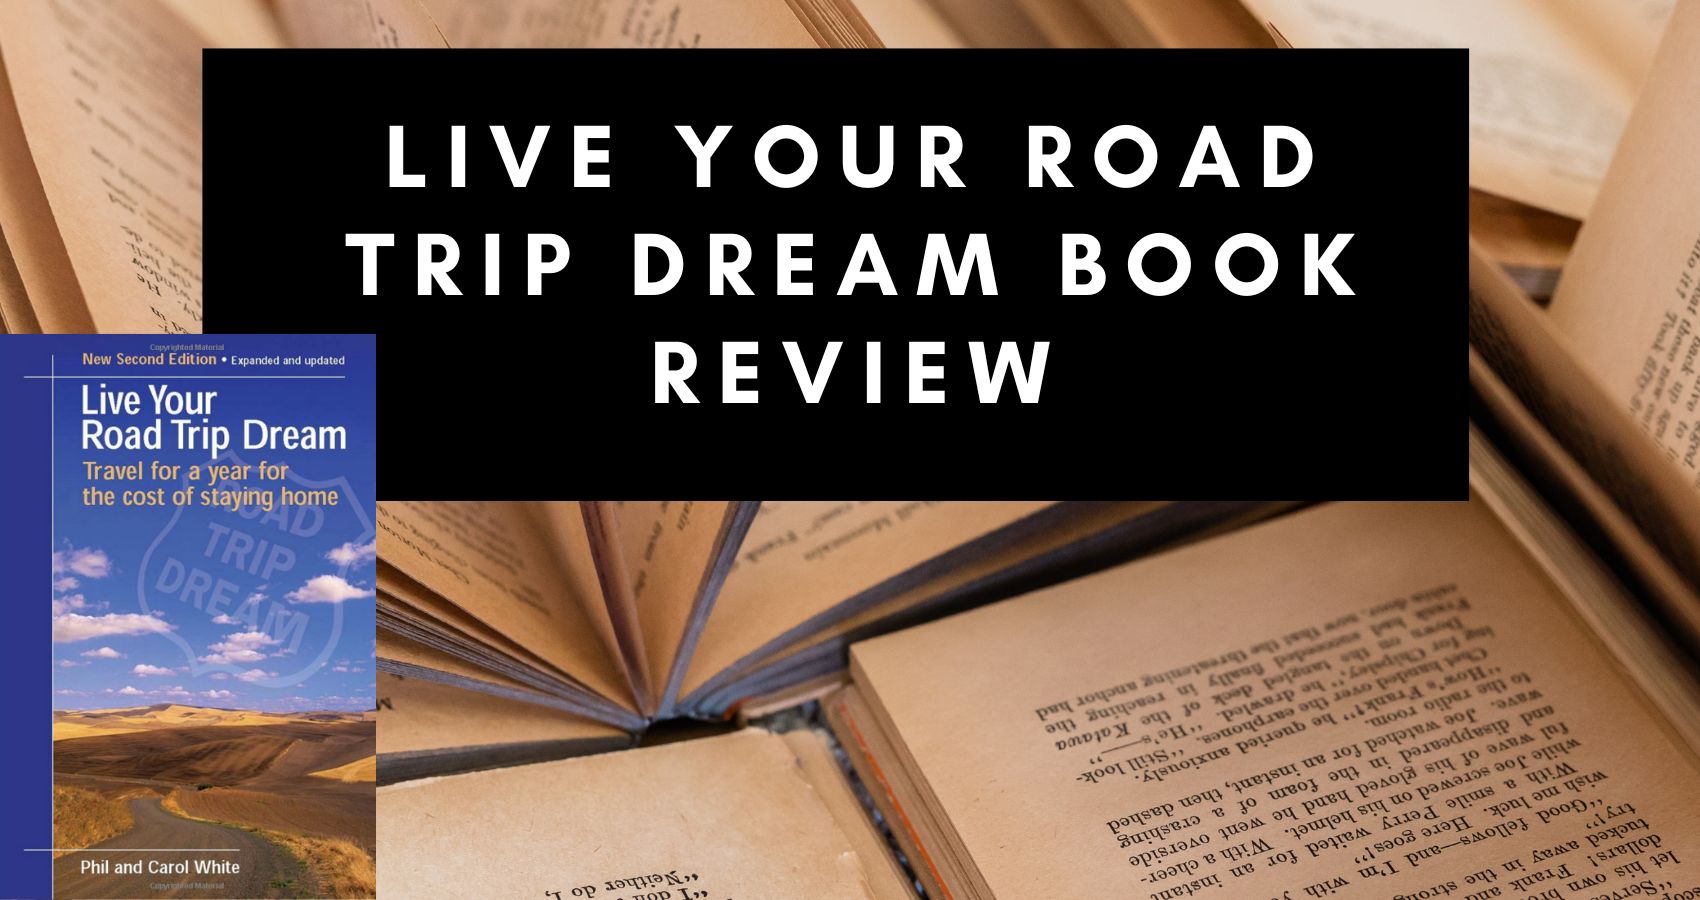 Live YOur Road Trip Dream Reviews